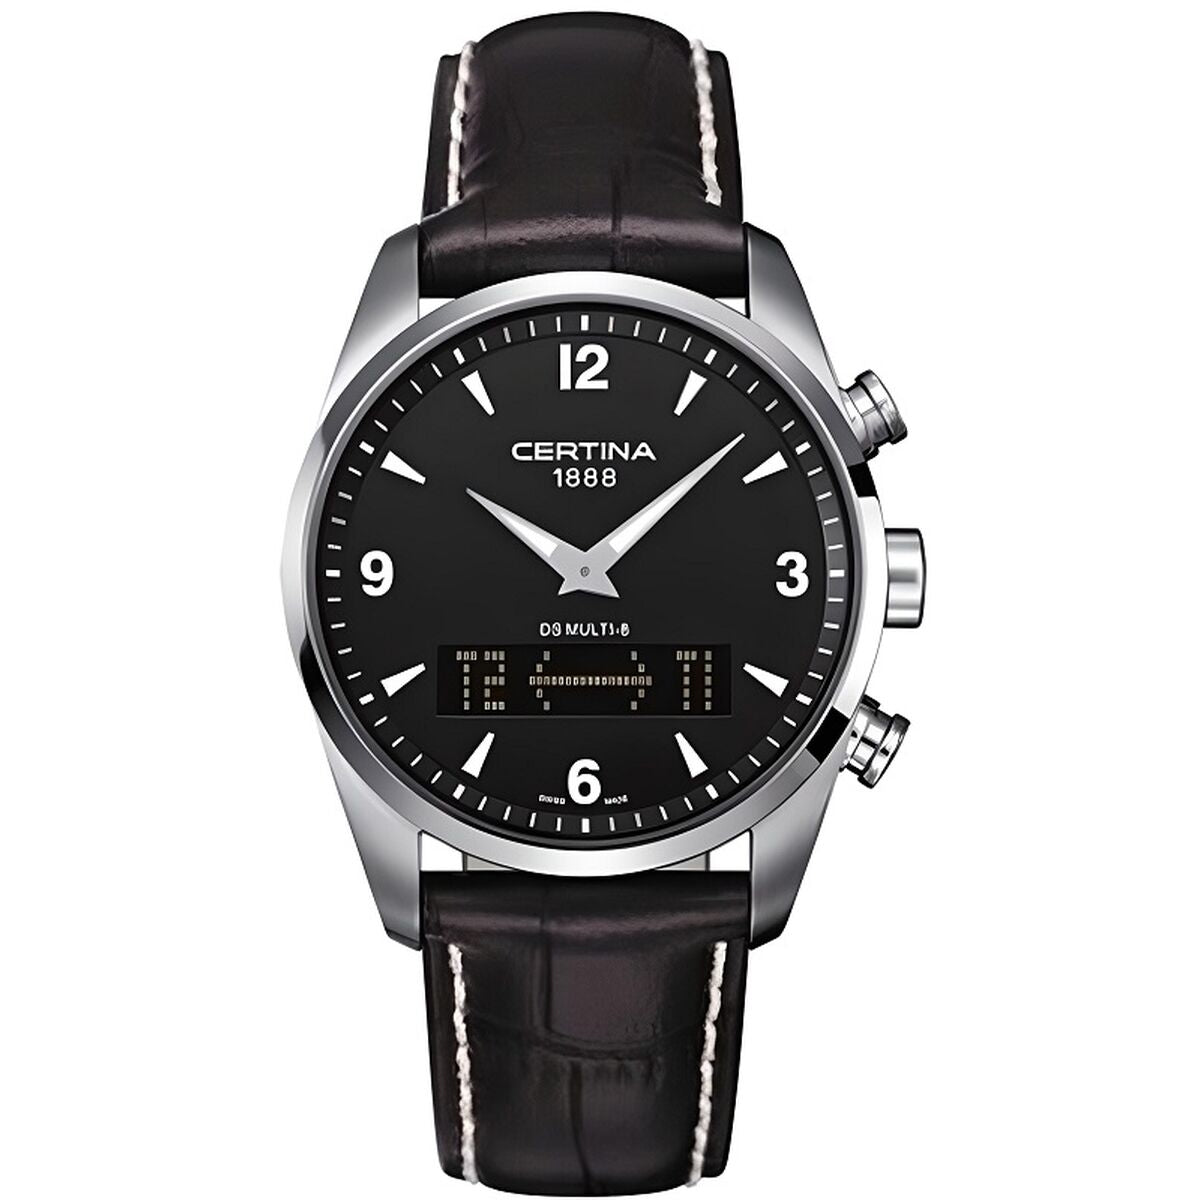 Certina Men's Watch  Ds Multi-8 Gbby2 In Black